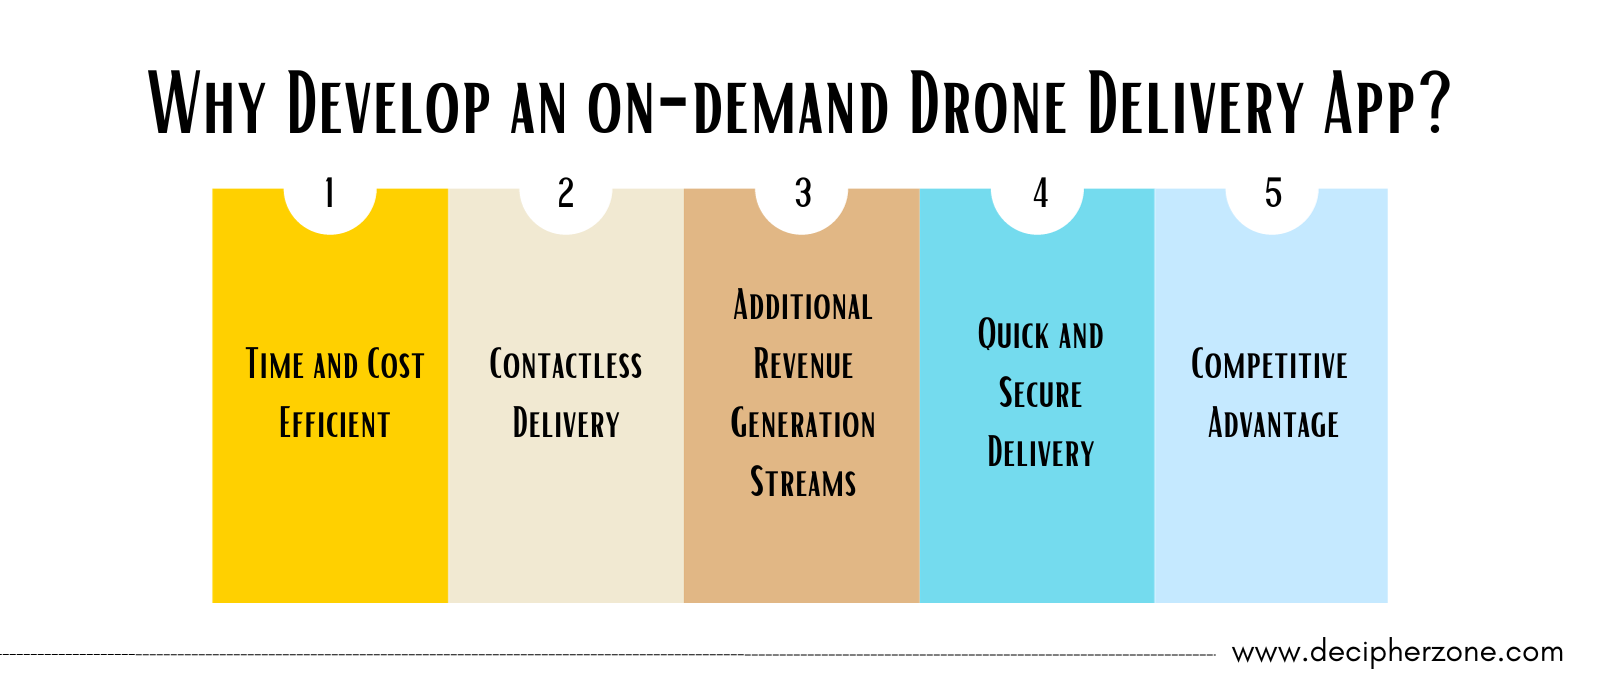 Drone Delivery App Development Benefits